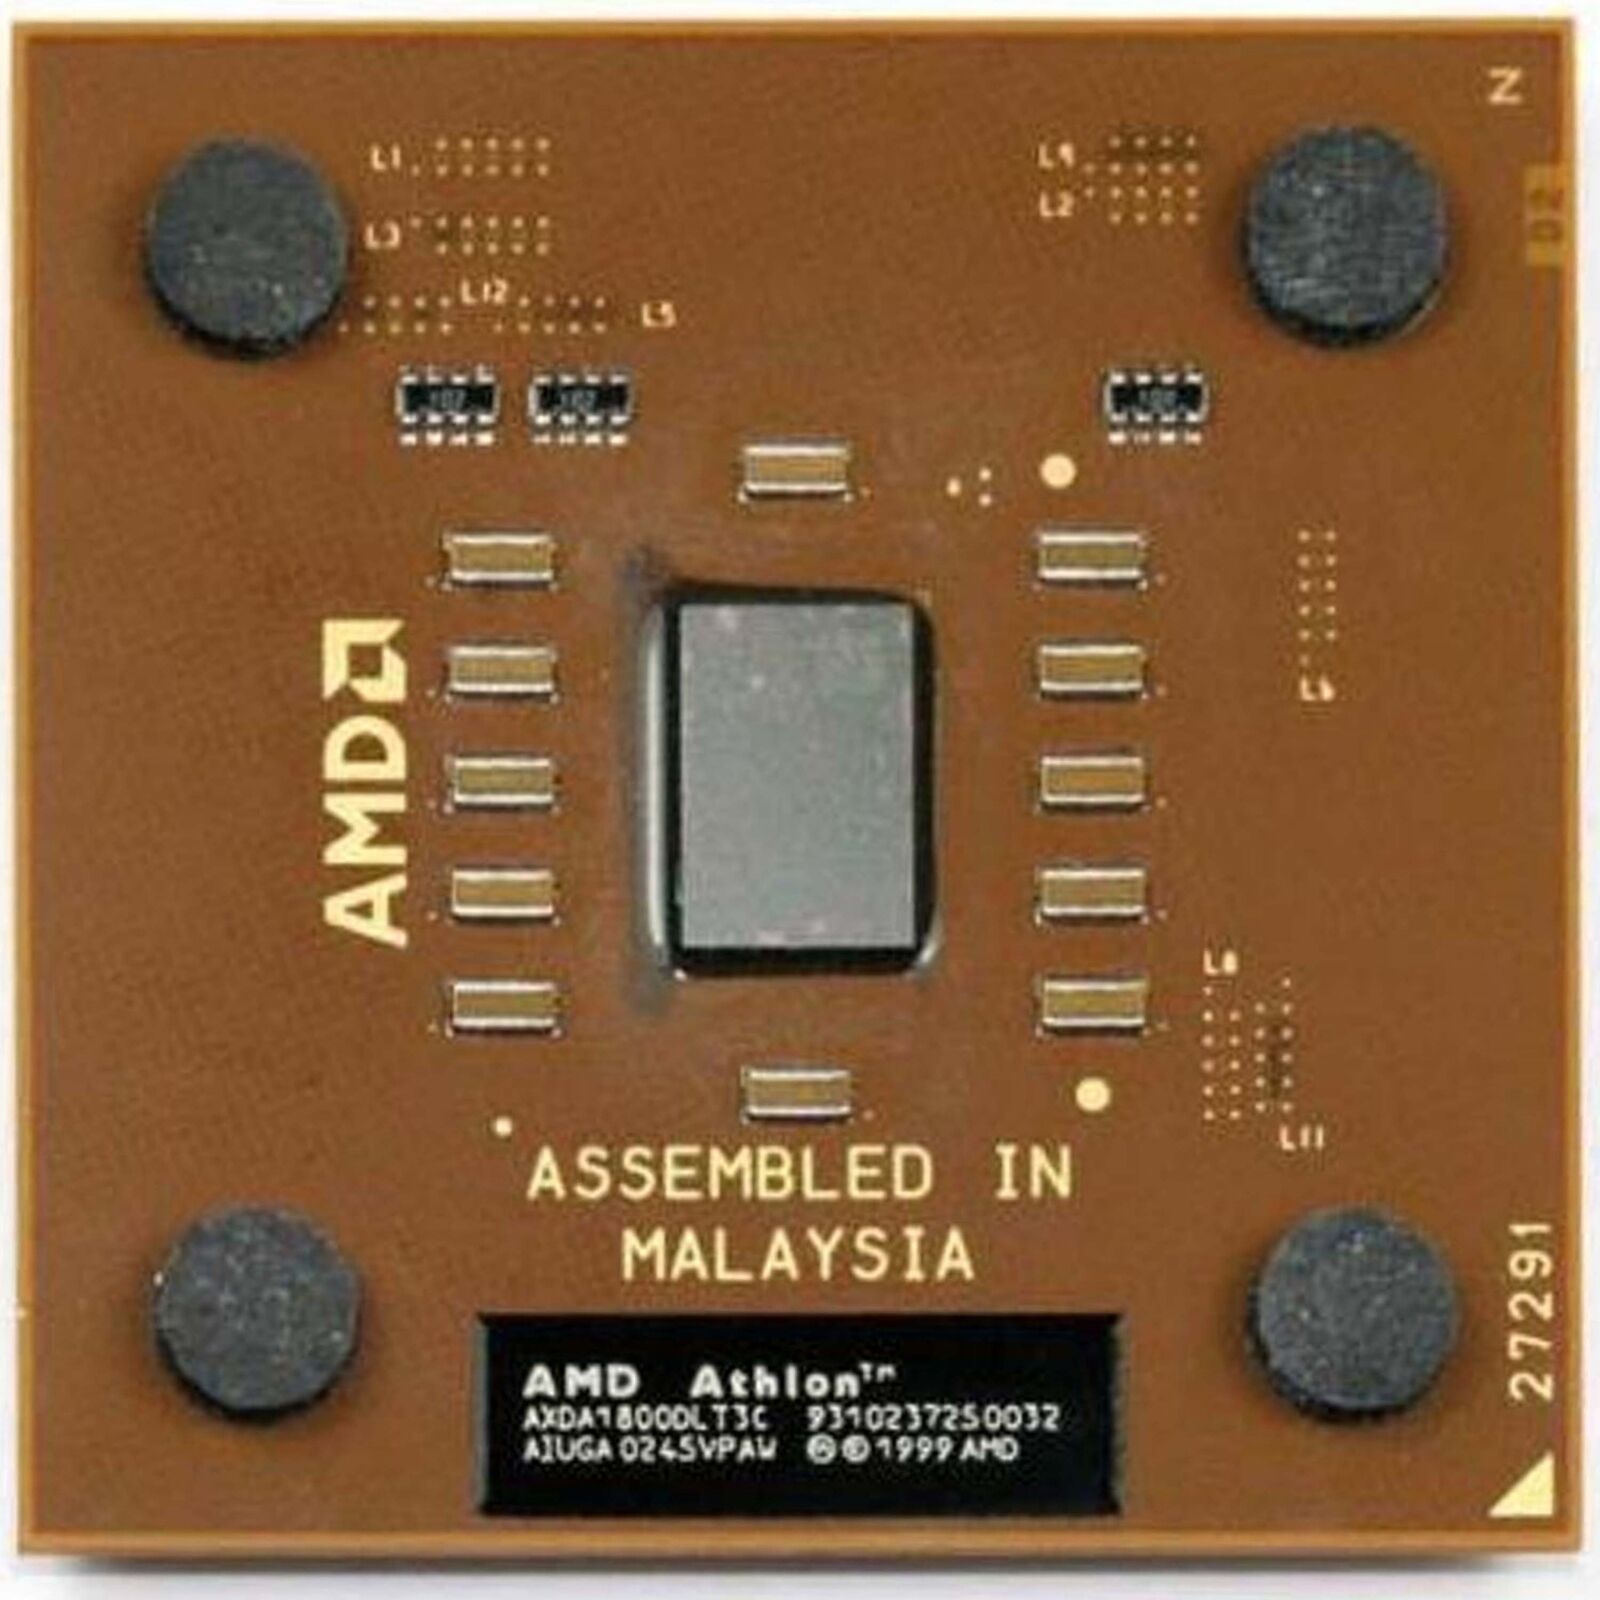 AMD Athlon XP 1800+ Axda1800dut3c Vintage Plush Processor Refurbished